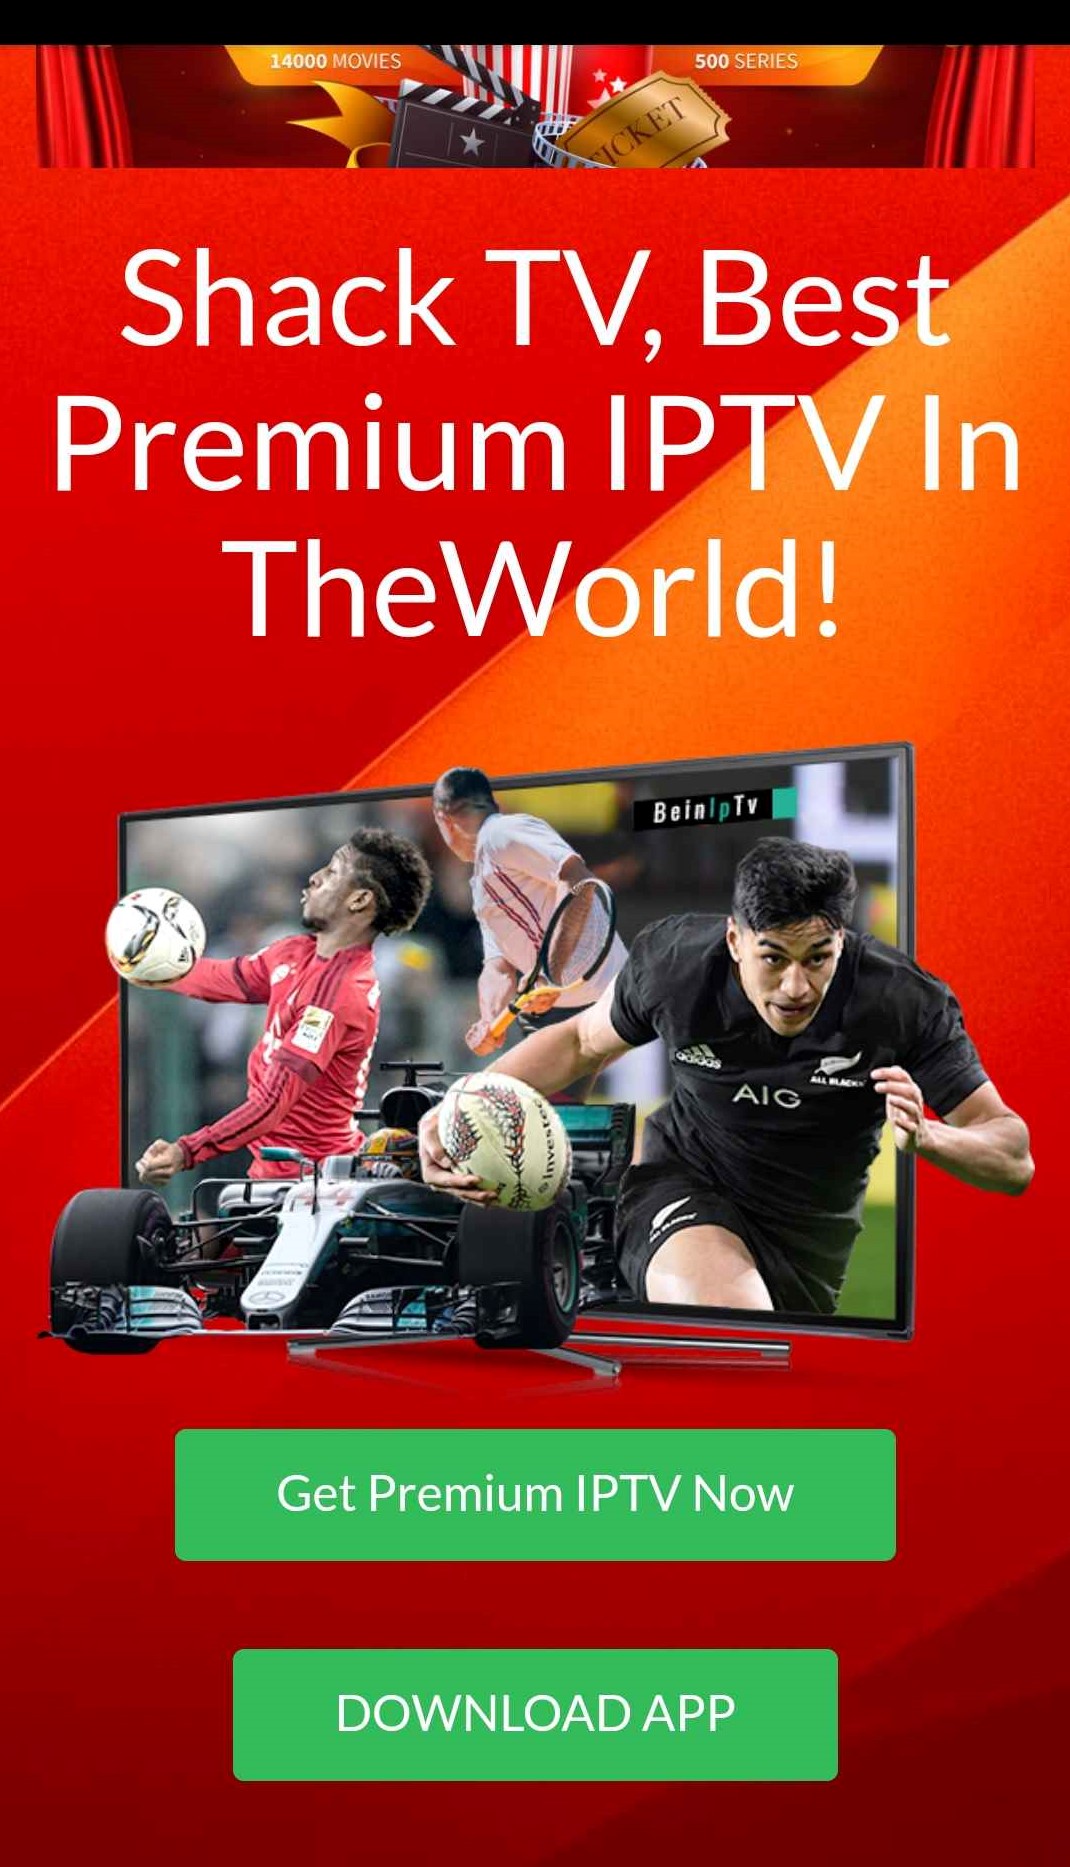 Select Download App to stream Shack TV IPTV